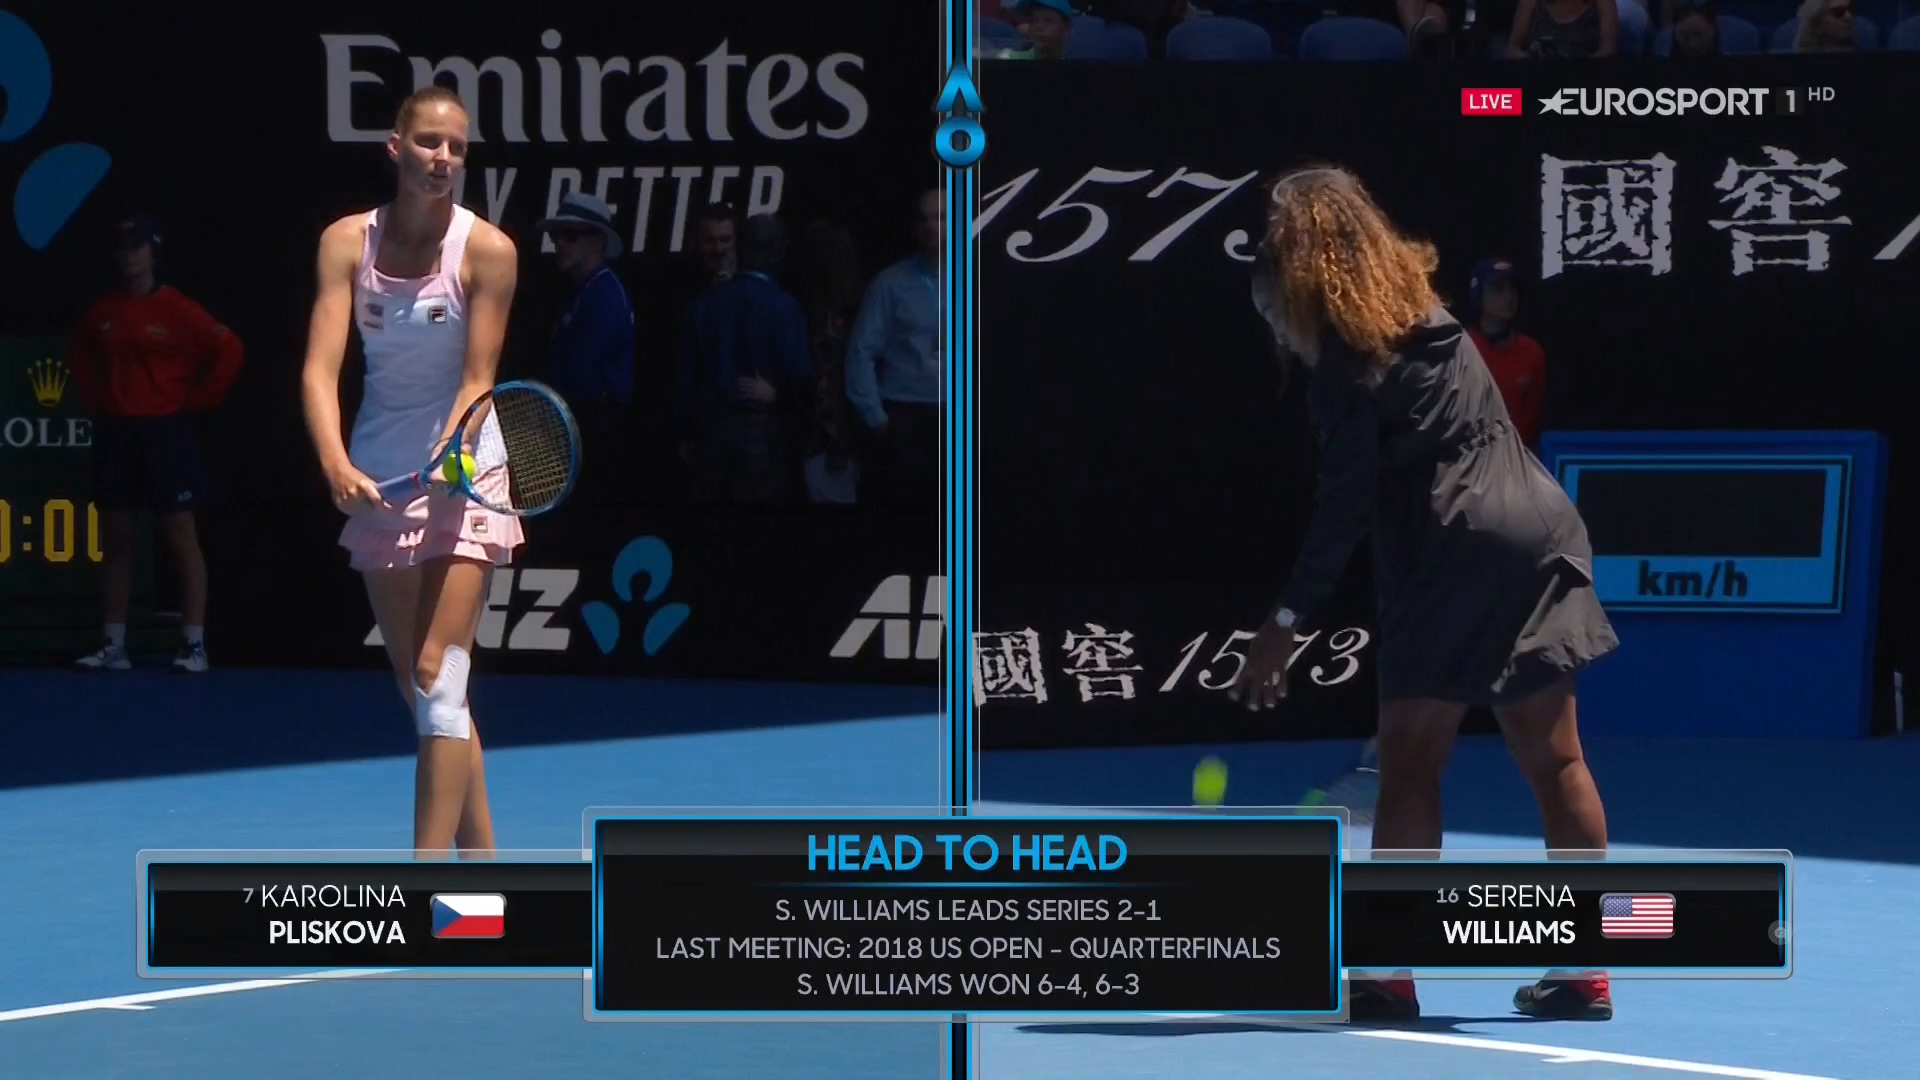 TENNIS: Australian Open QF - Serena Williams vs Karolina Pliskova - 23/01/20191920 x 1080